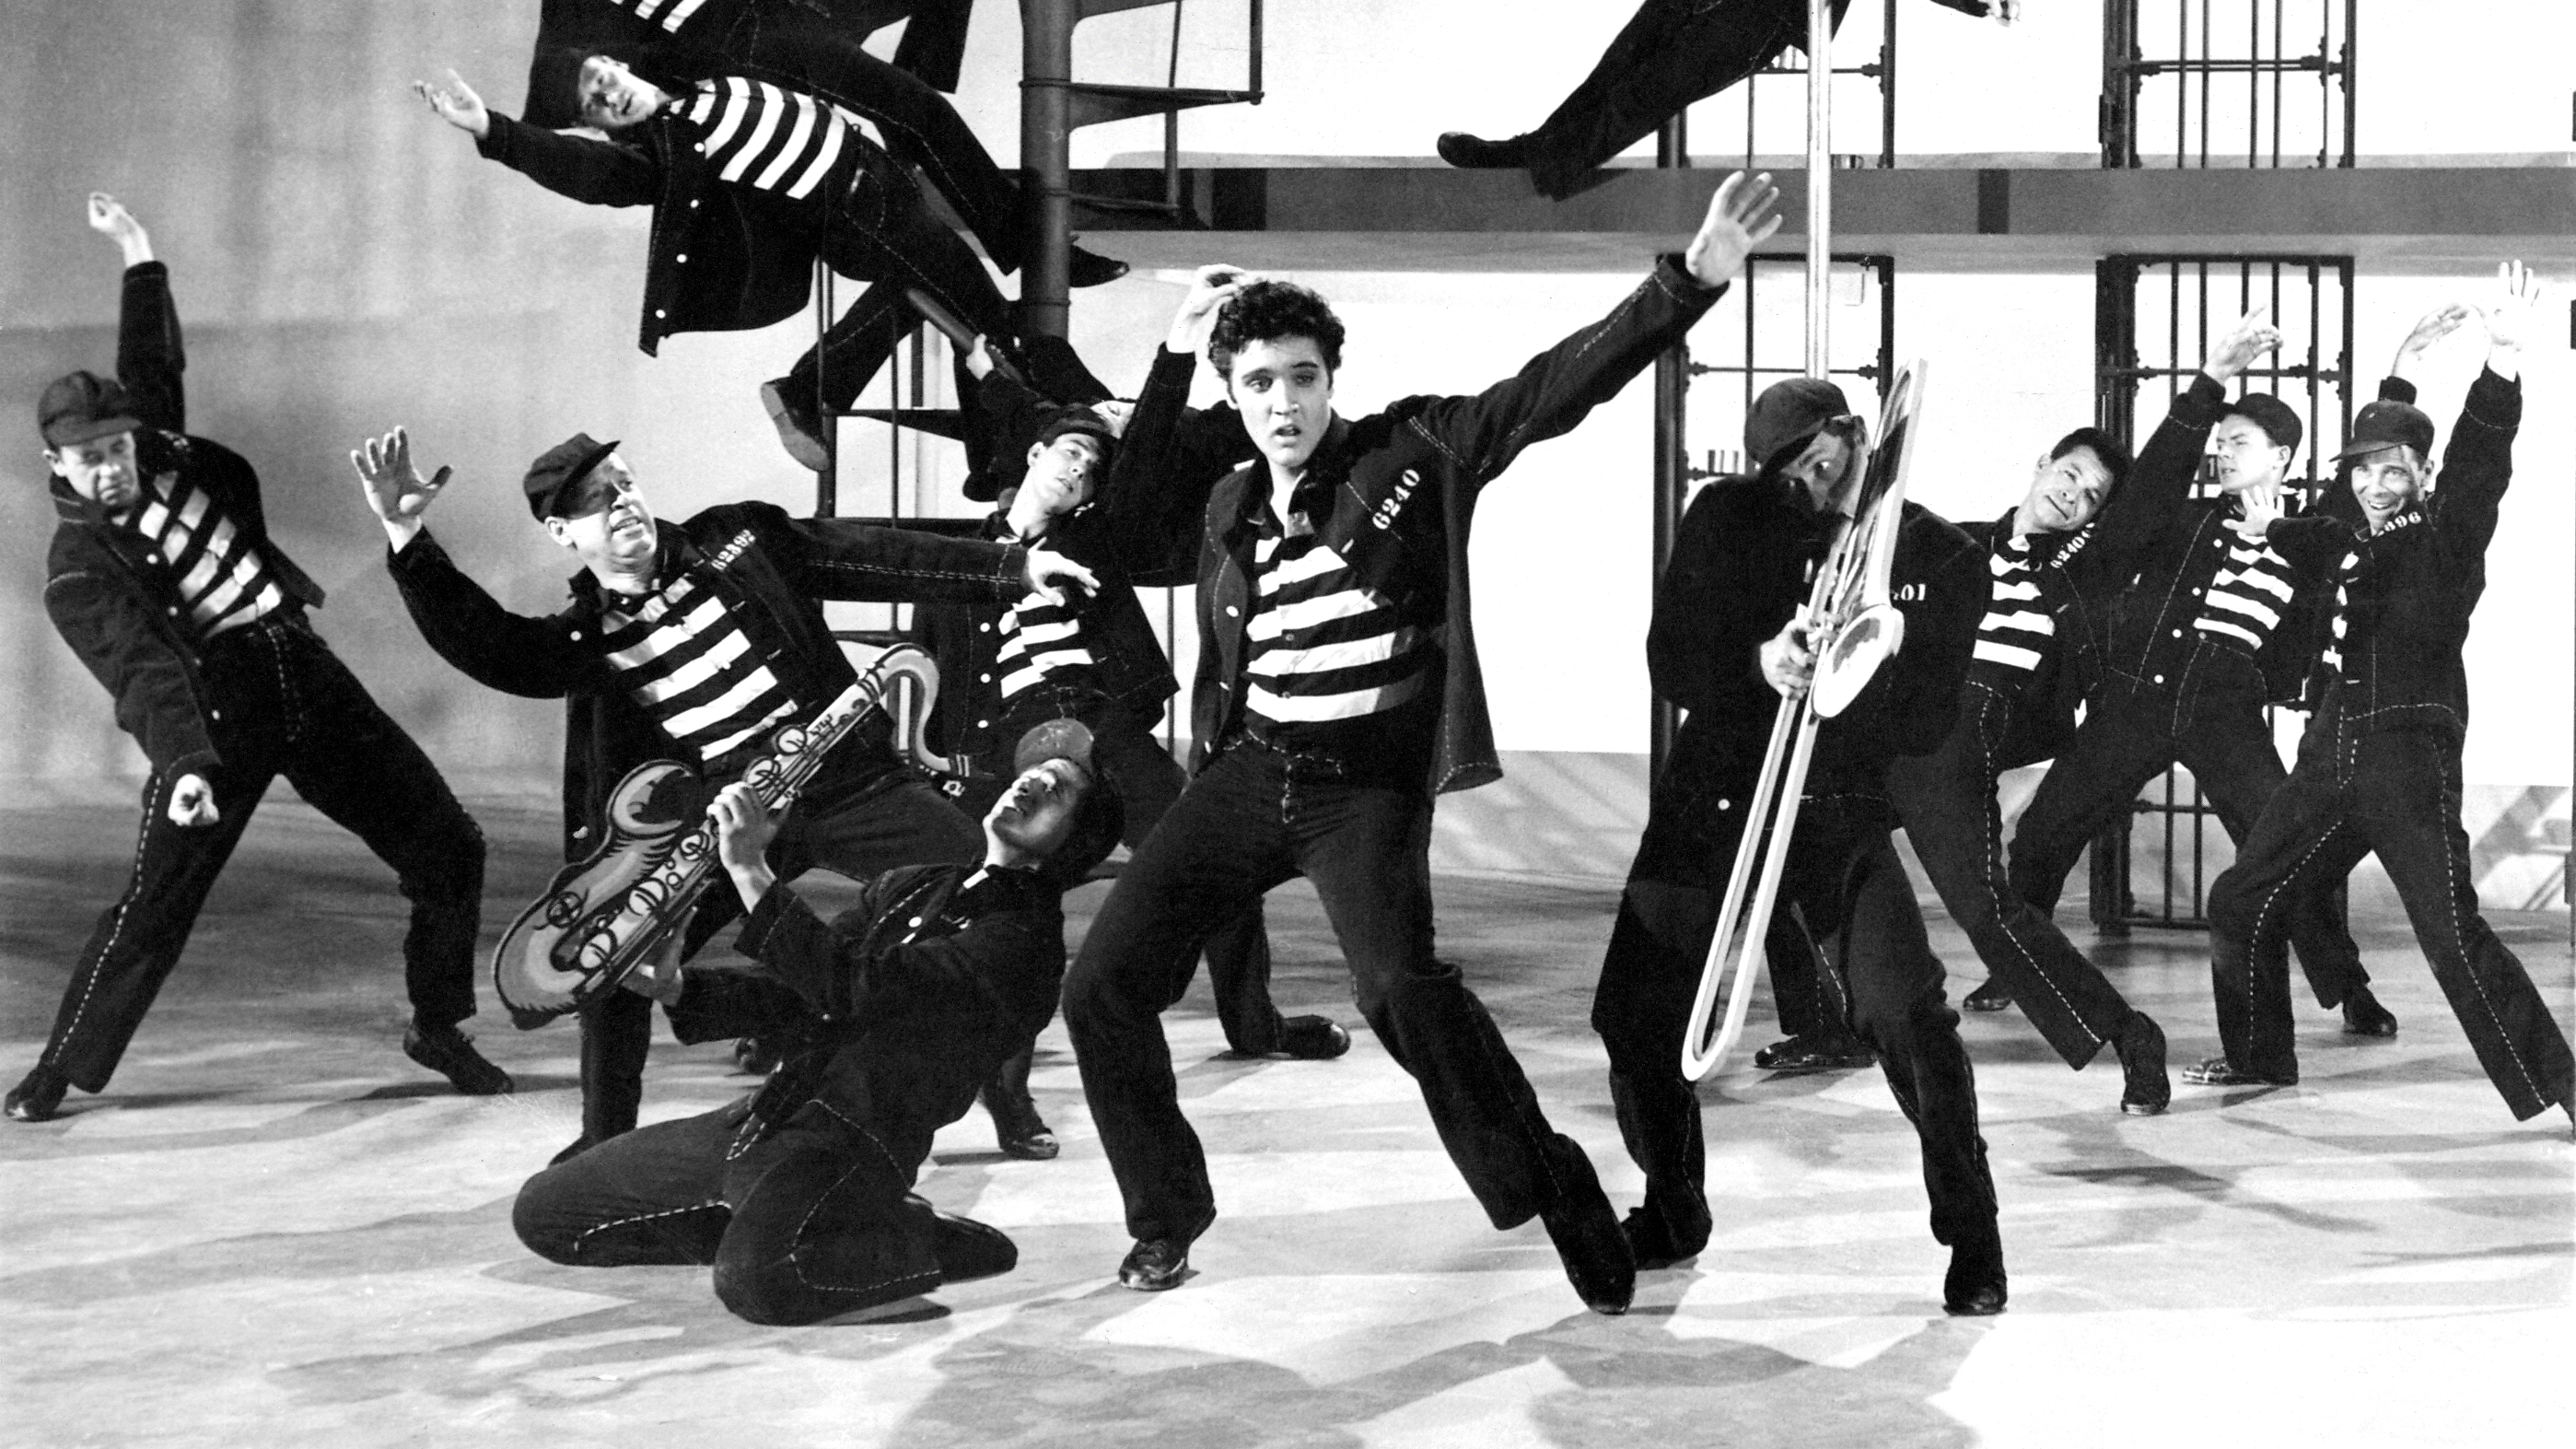 Jailhouse Rock (1957) Directed by Richard ThorpeShown: Elvis Presley (center)